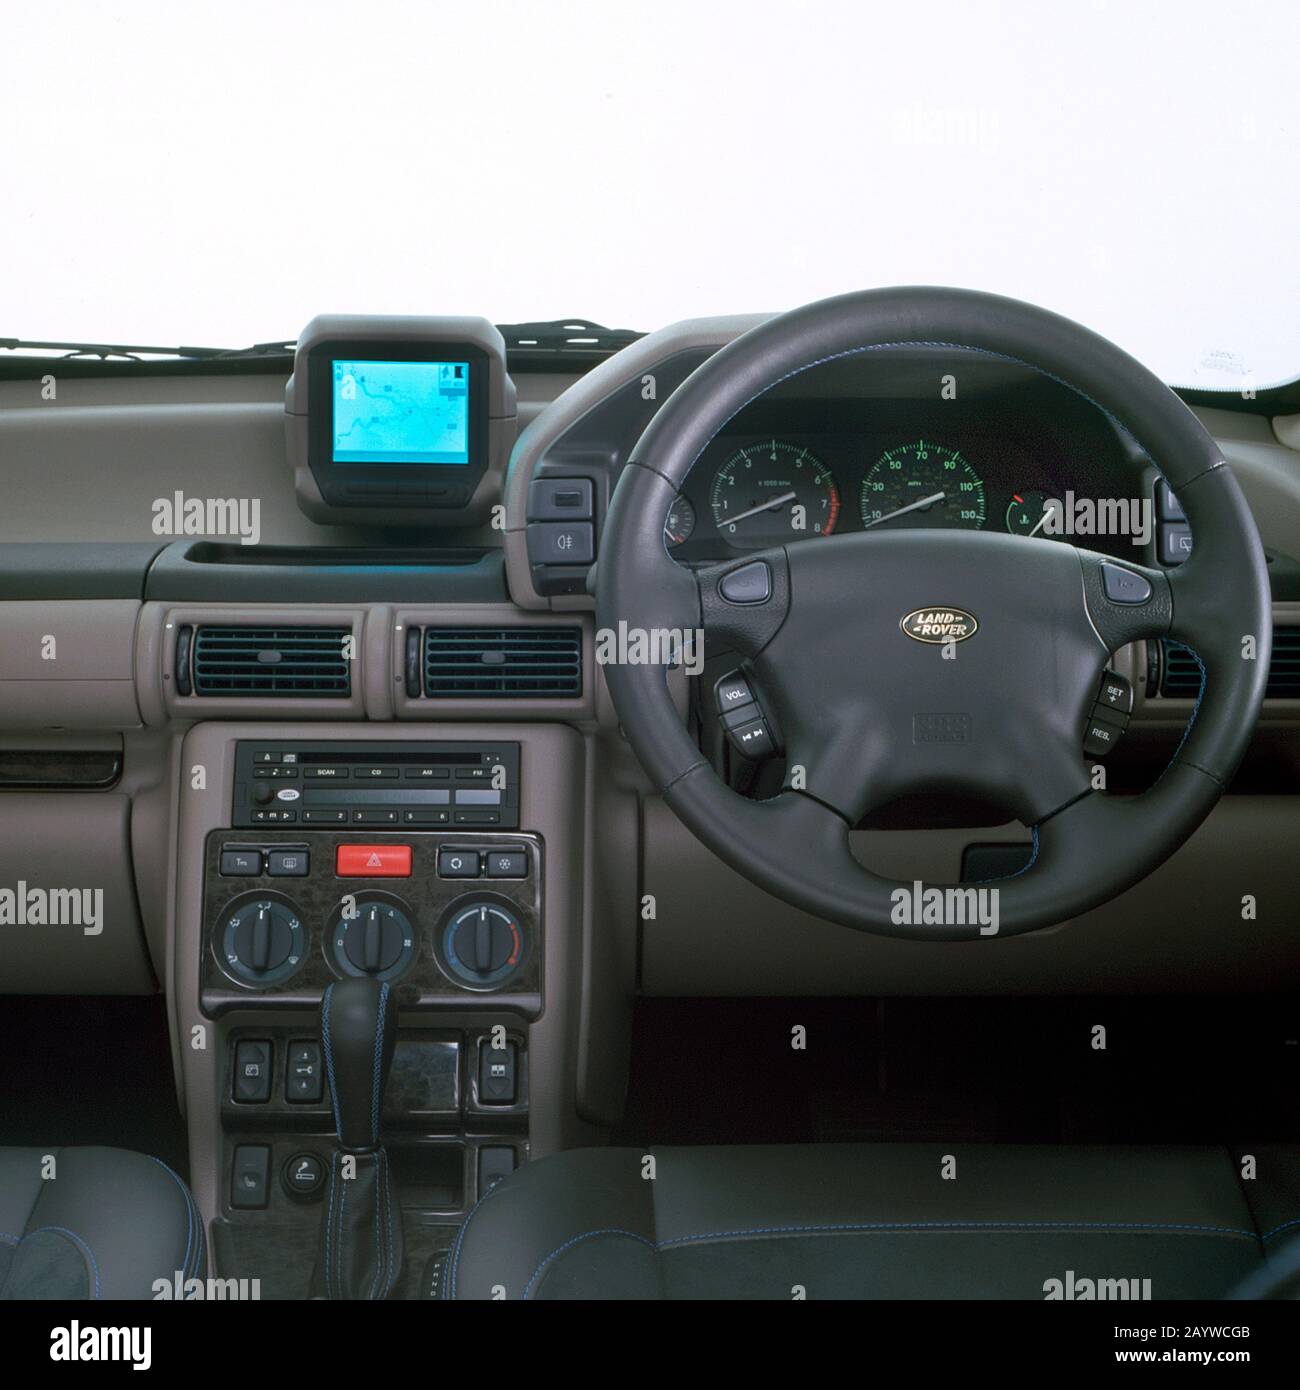 2001 Land Rover Freelander Autobiography interior Stock Photo - Alamy